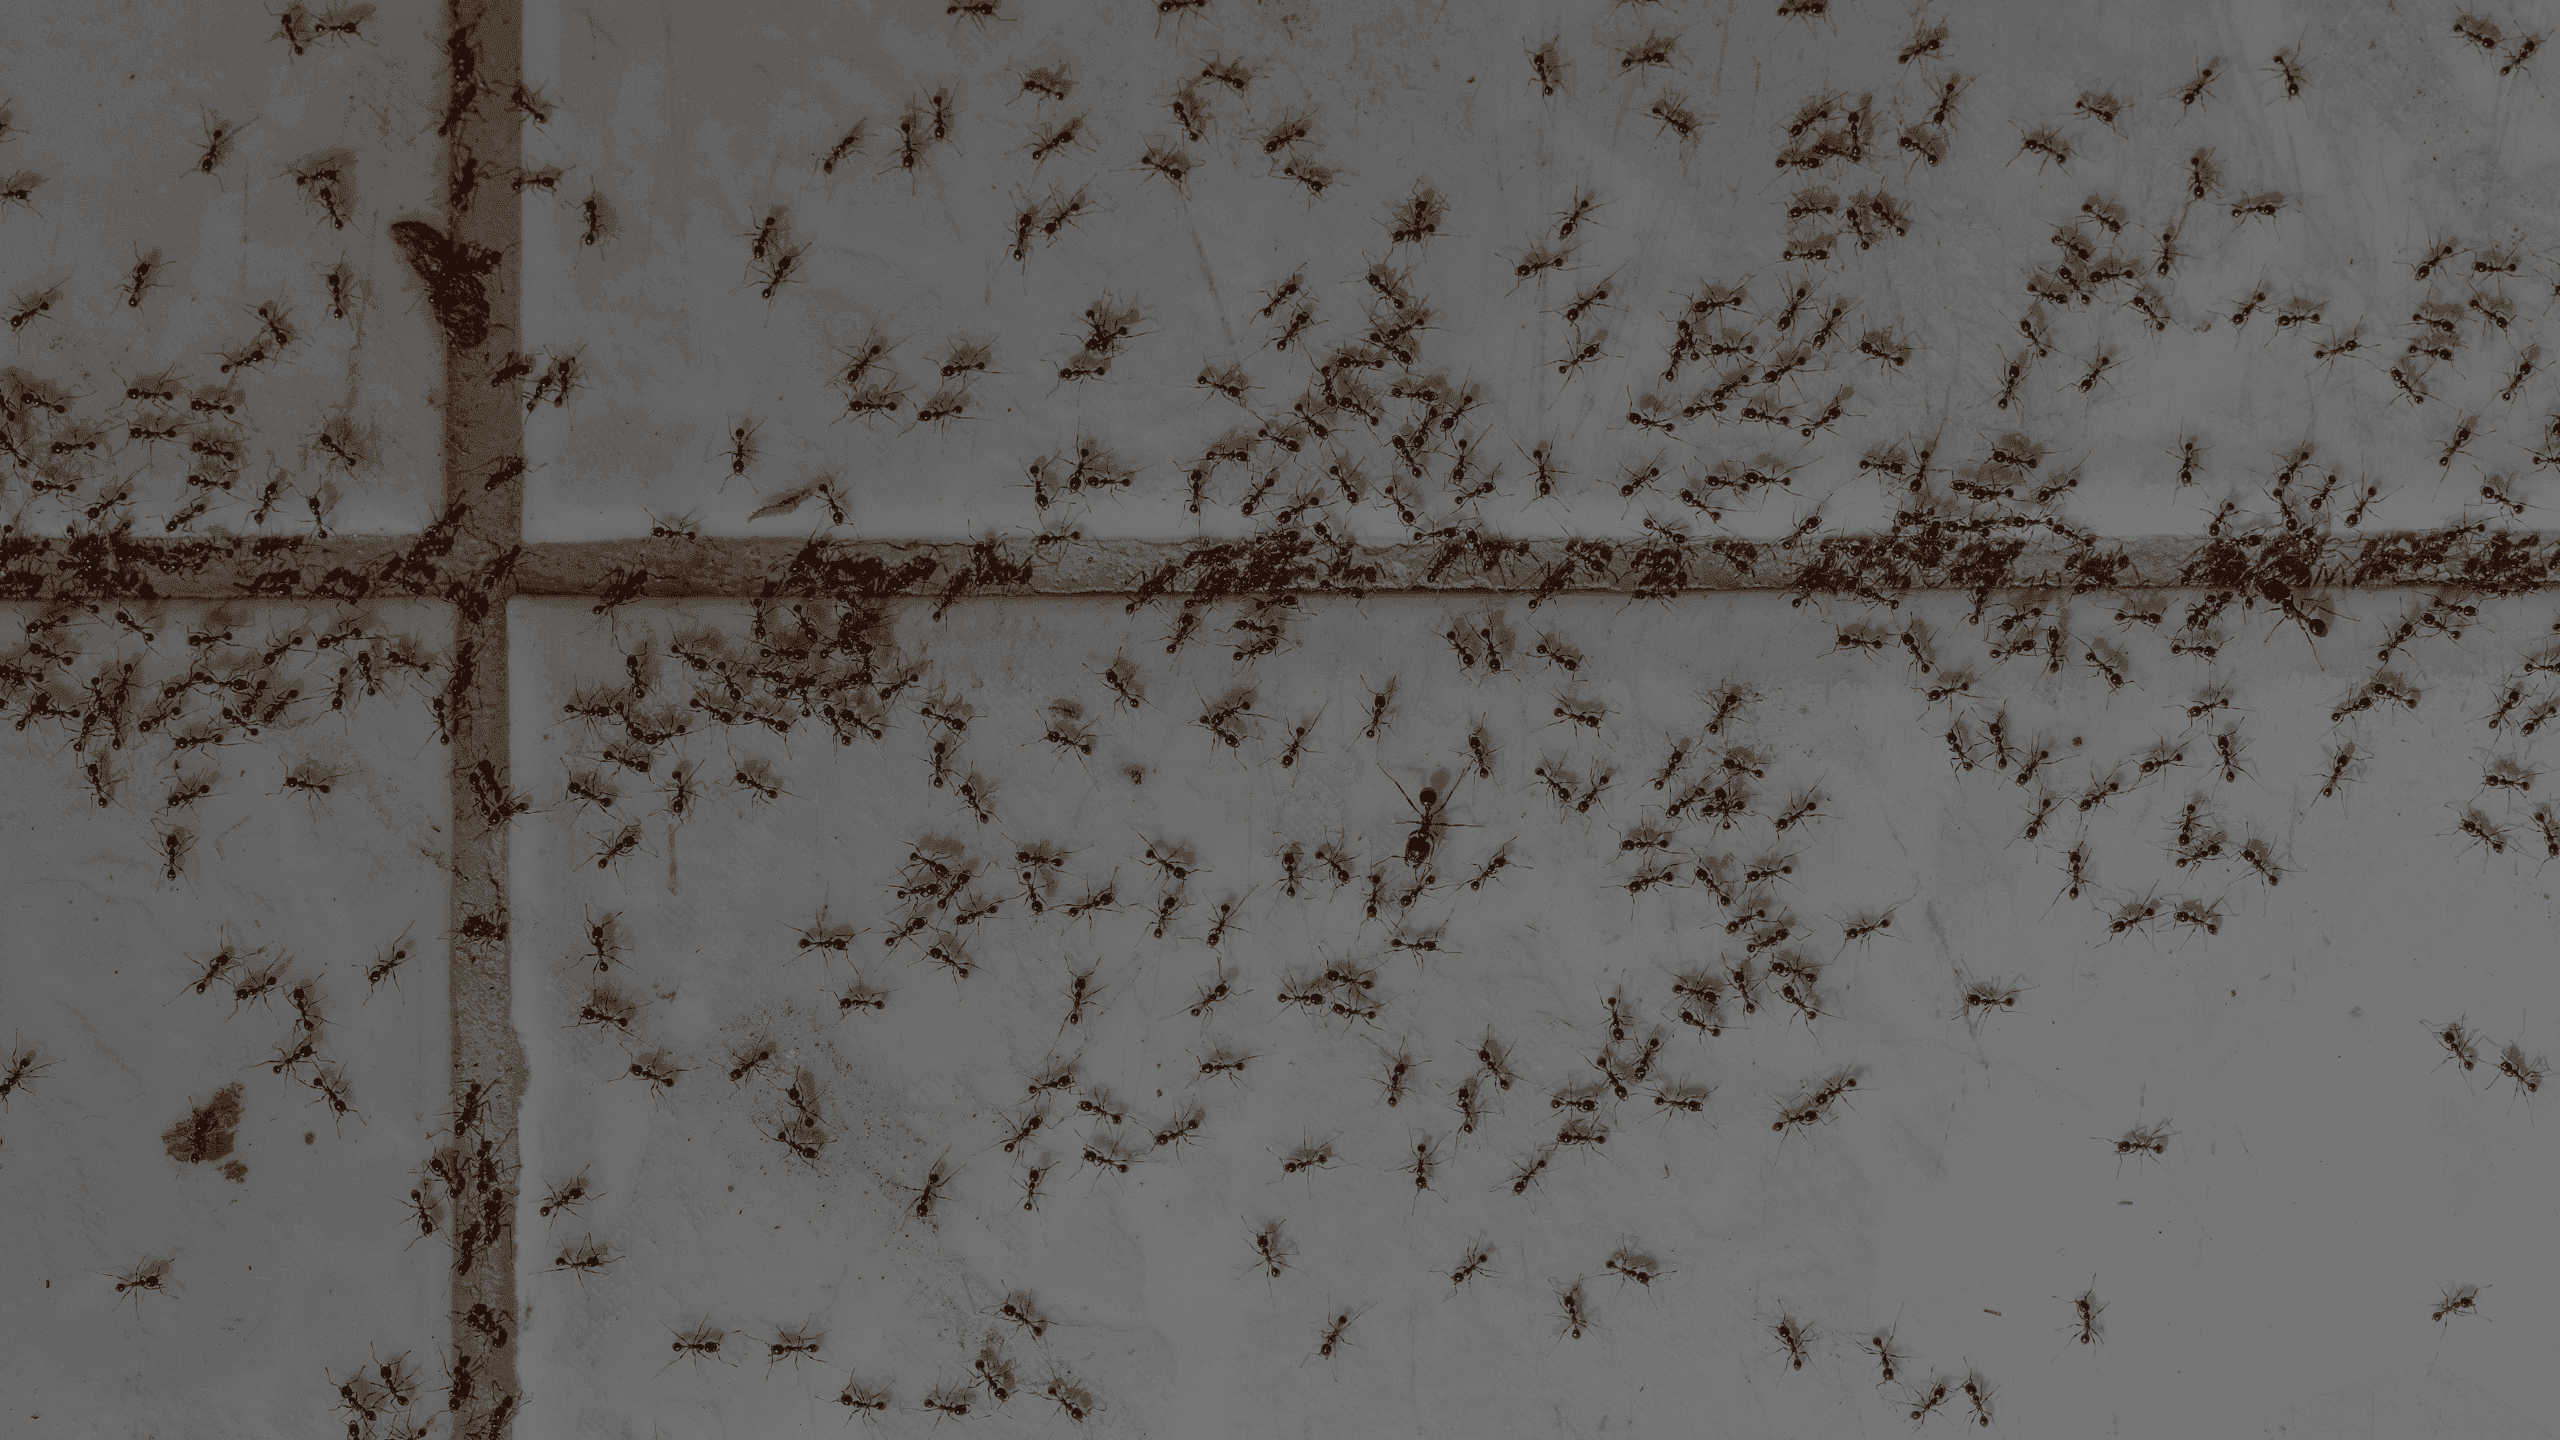 ants on a floor